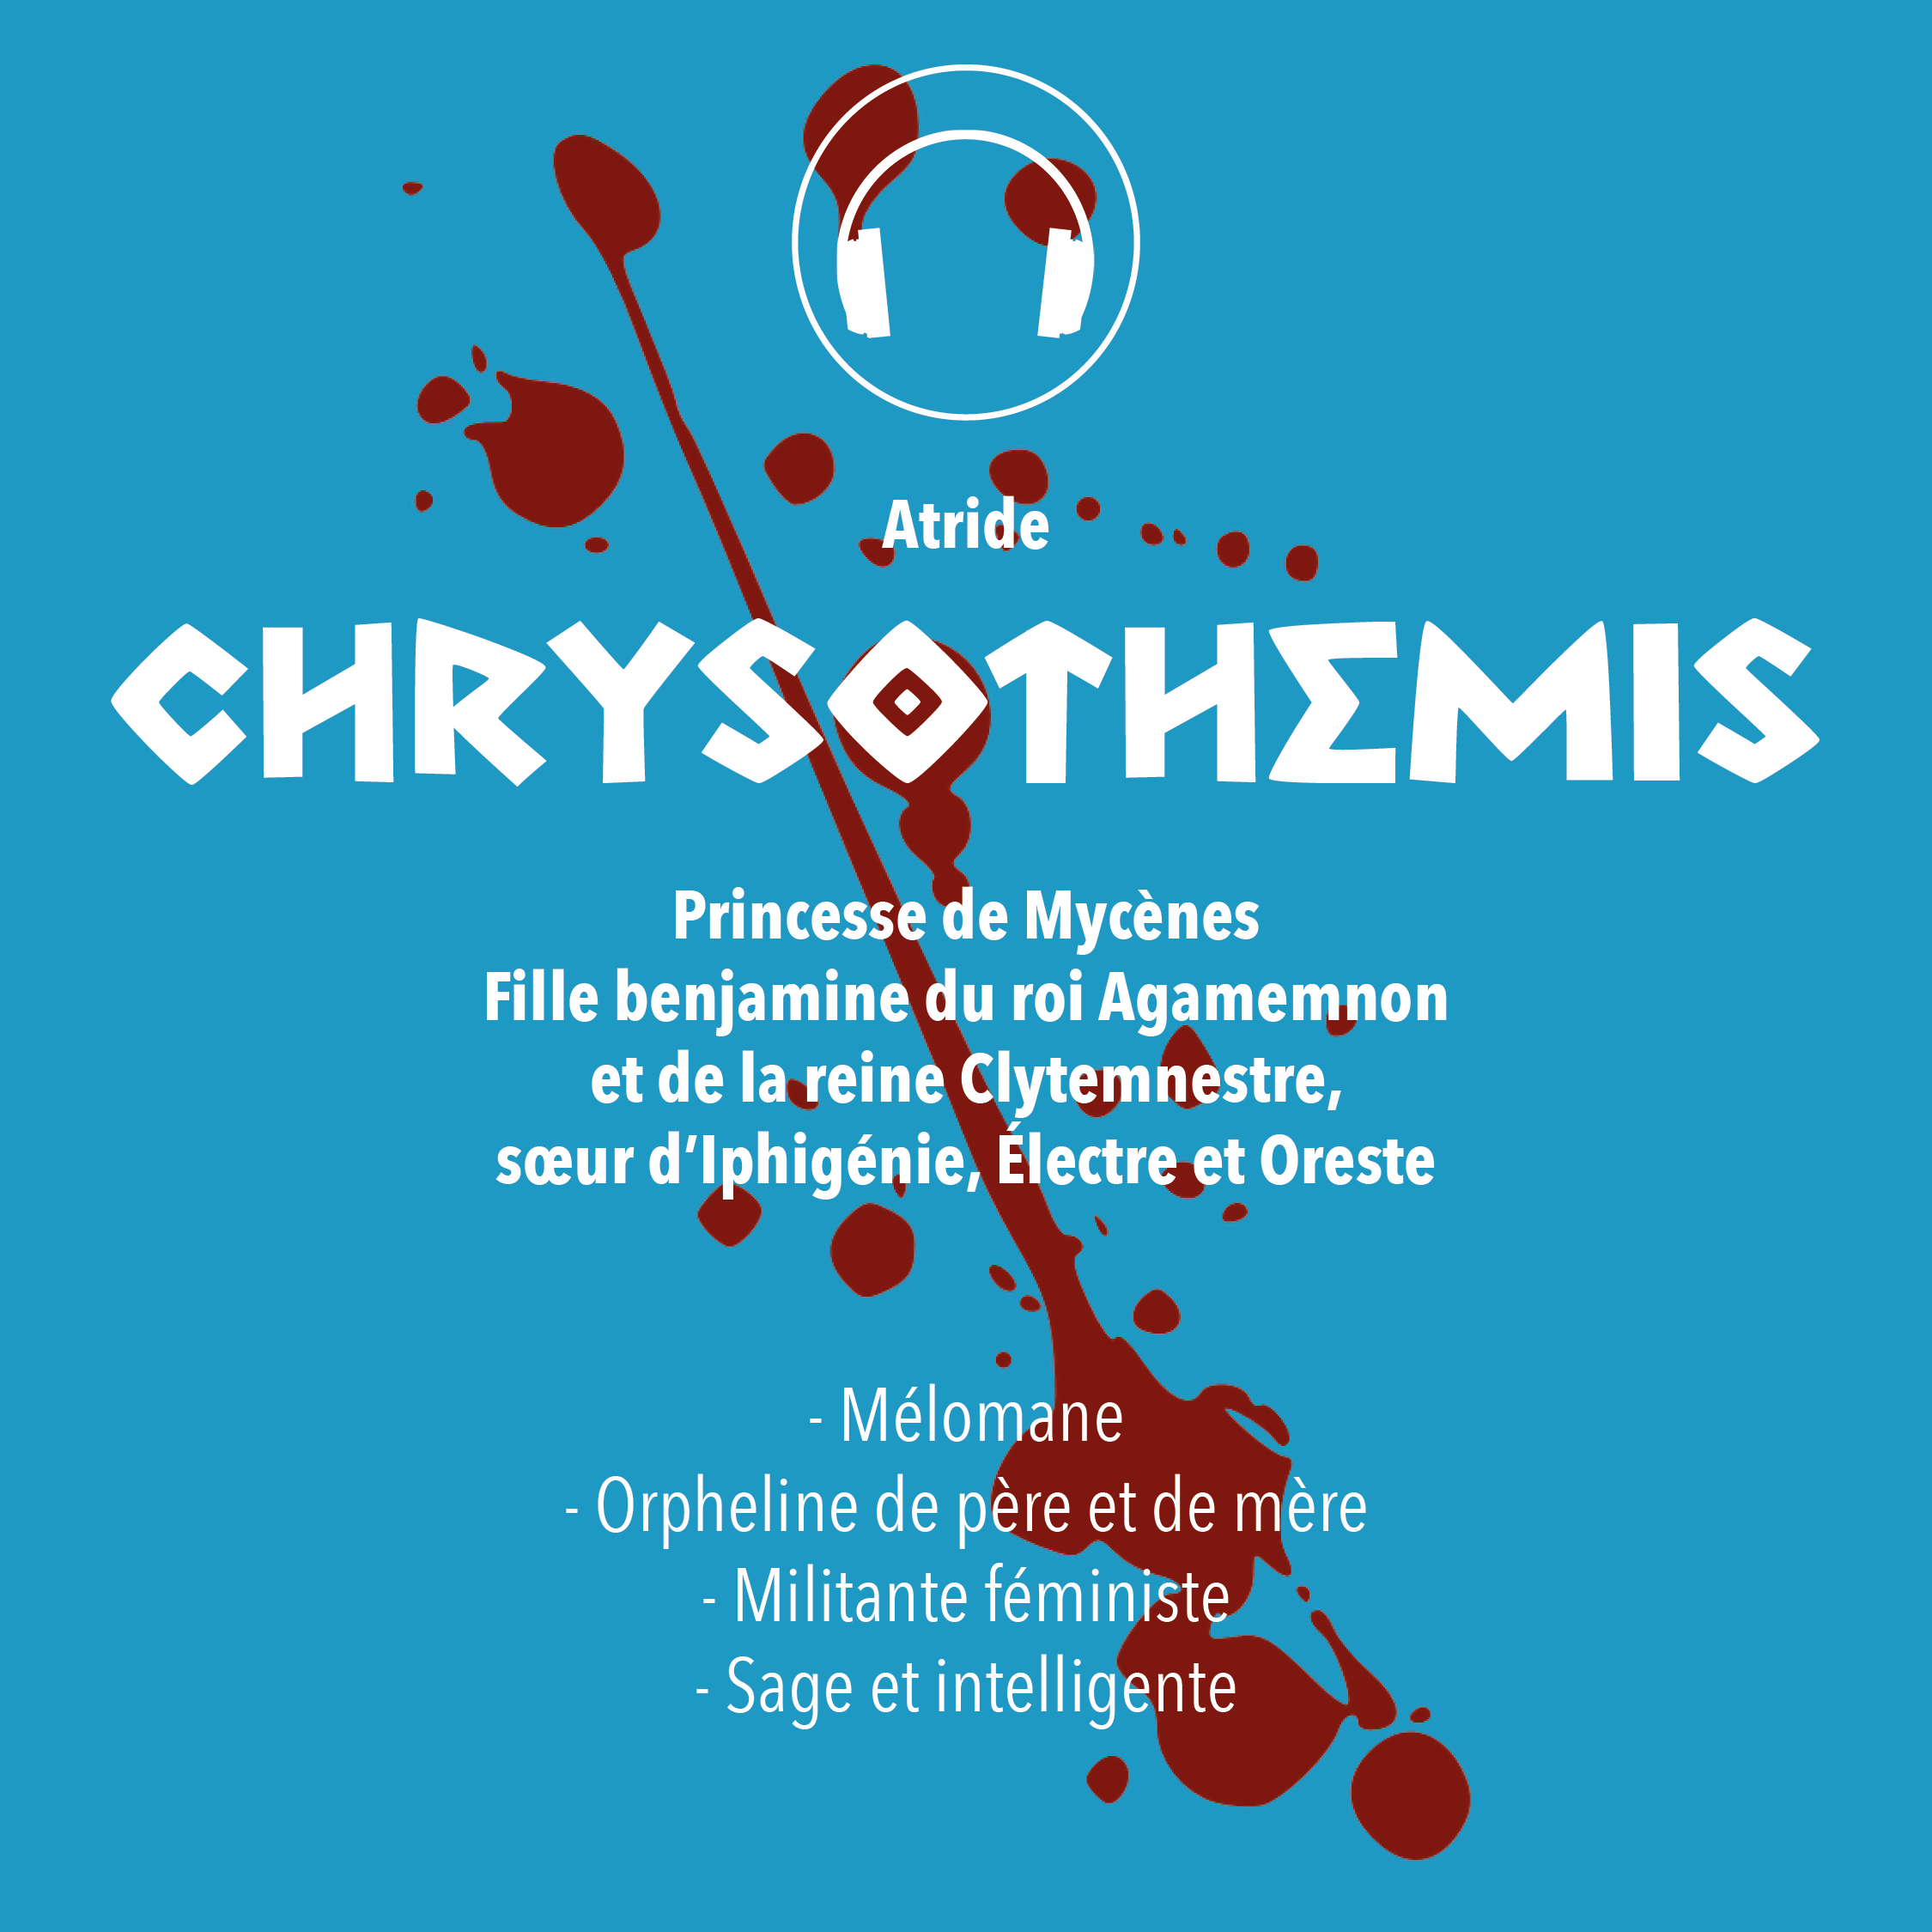 Chrysothemis